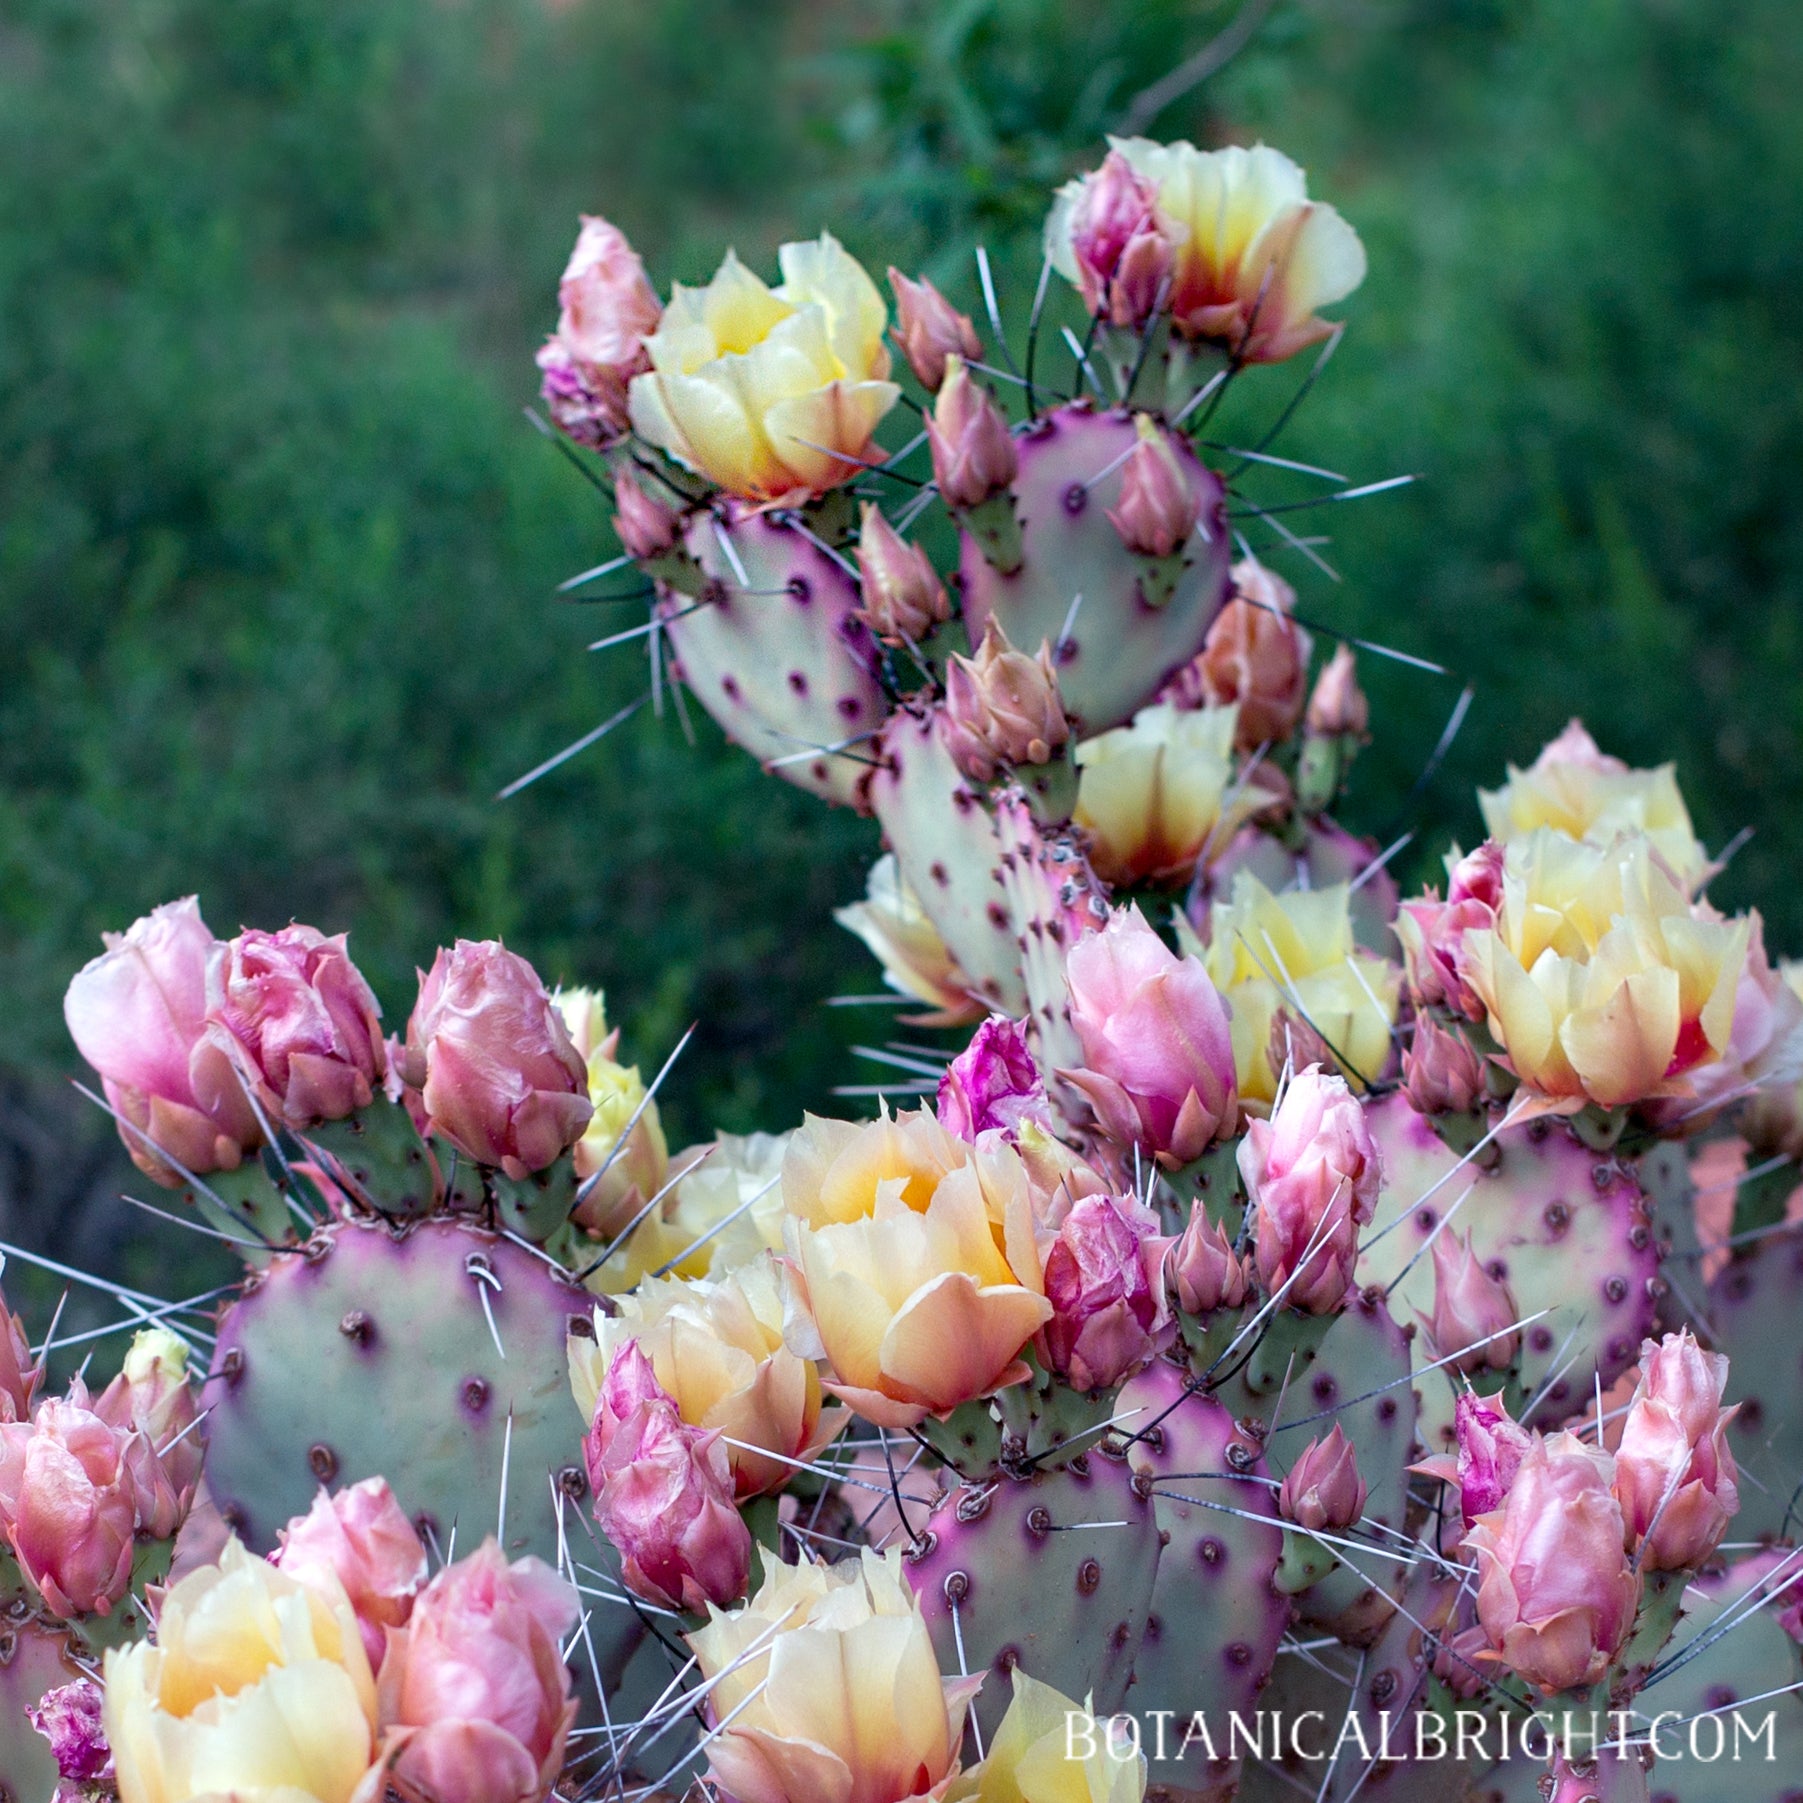 Botanical Bright - Cactus Cacti Opuntia Blooming